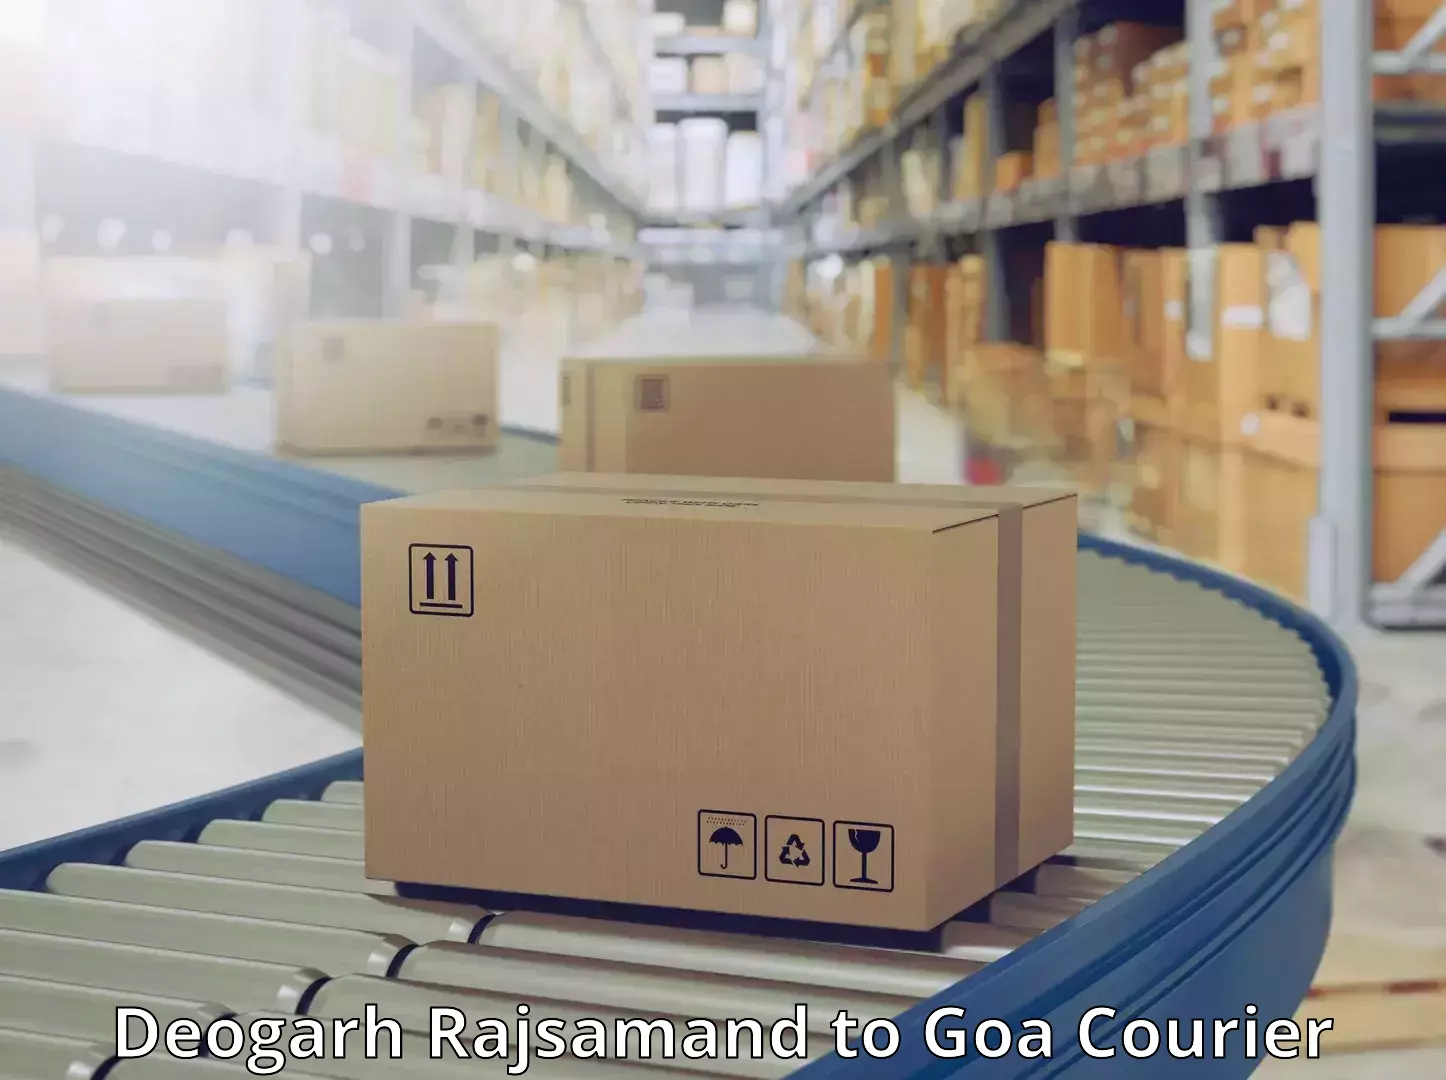 Door-to-door freight service Deogarh Rajsamand to South Goa